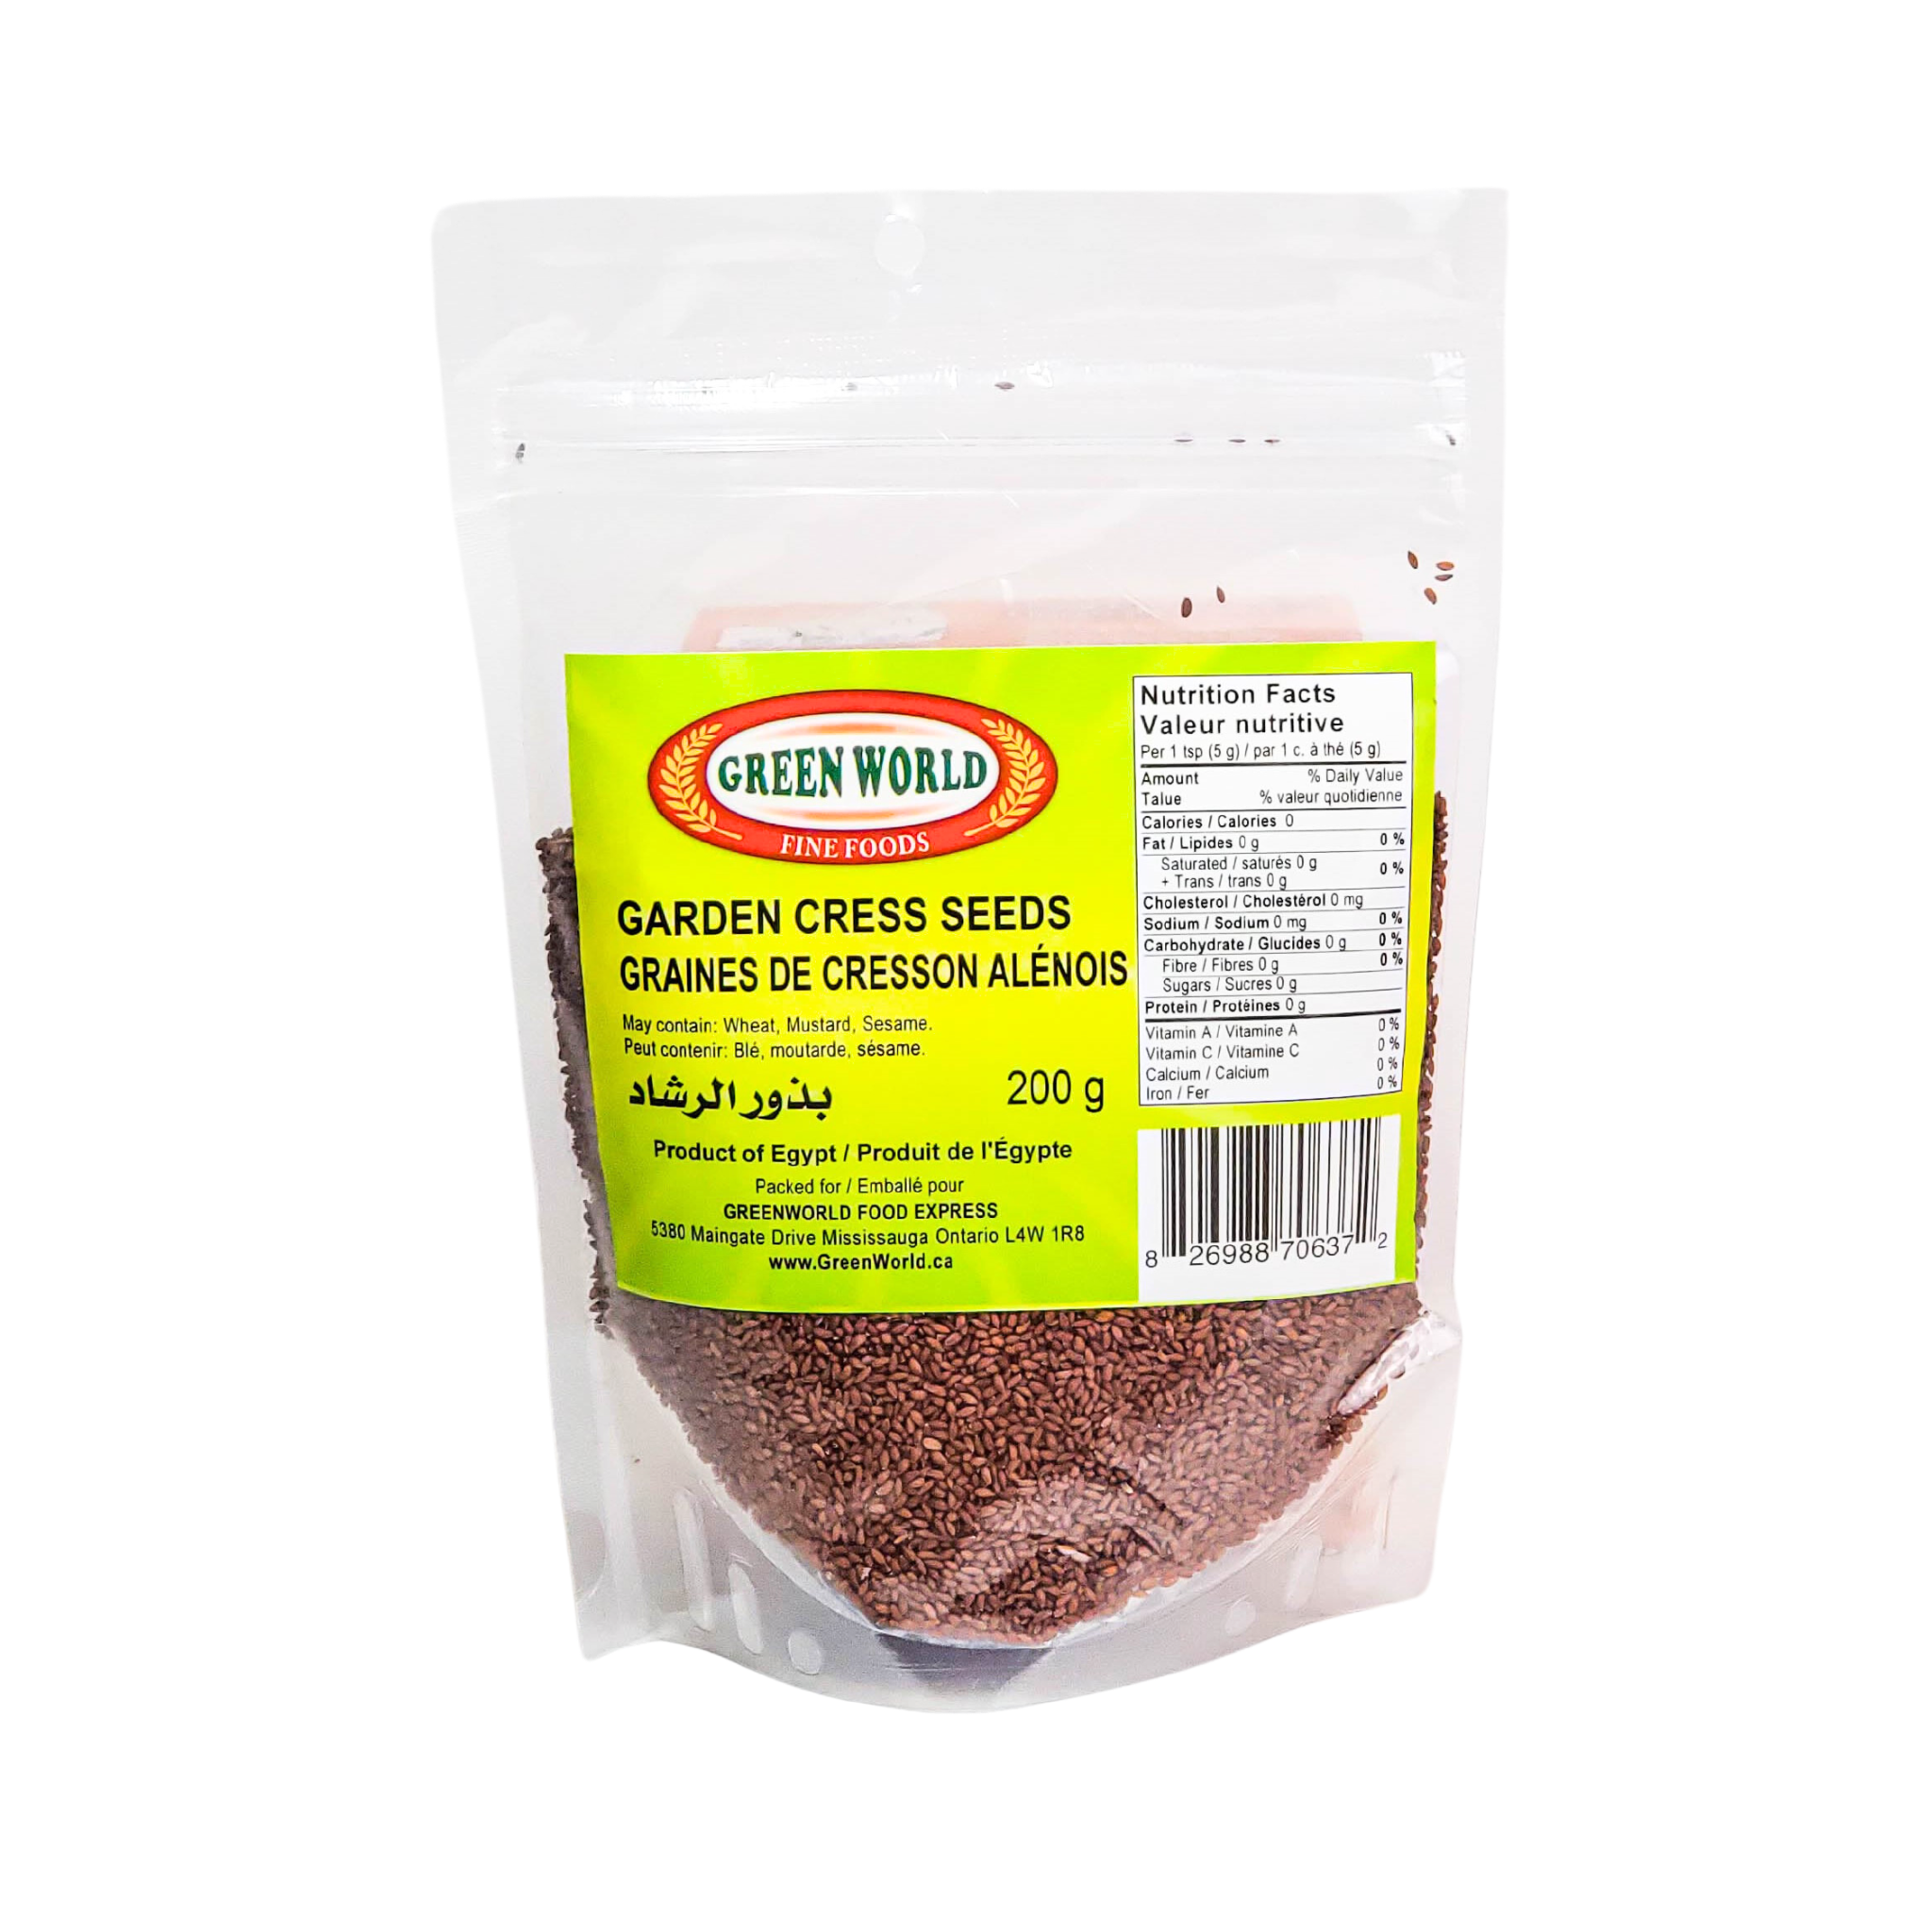 Green World Fine Foods Garden Cress Seeds ( Graines de Cresson Alenois) 200 g